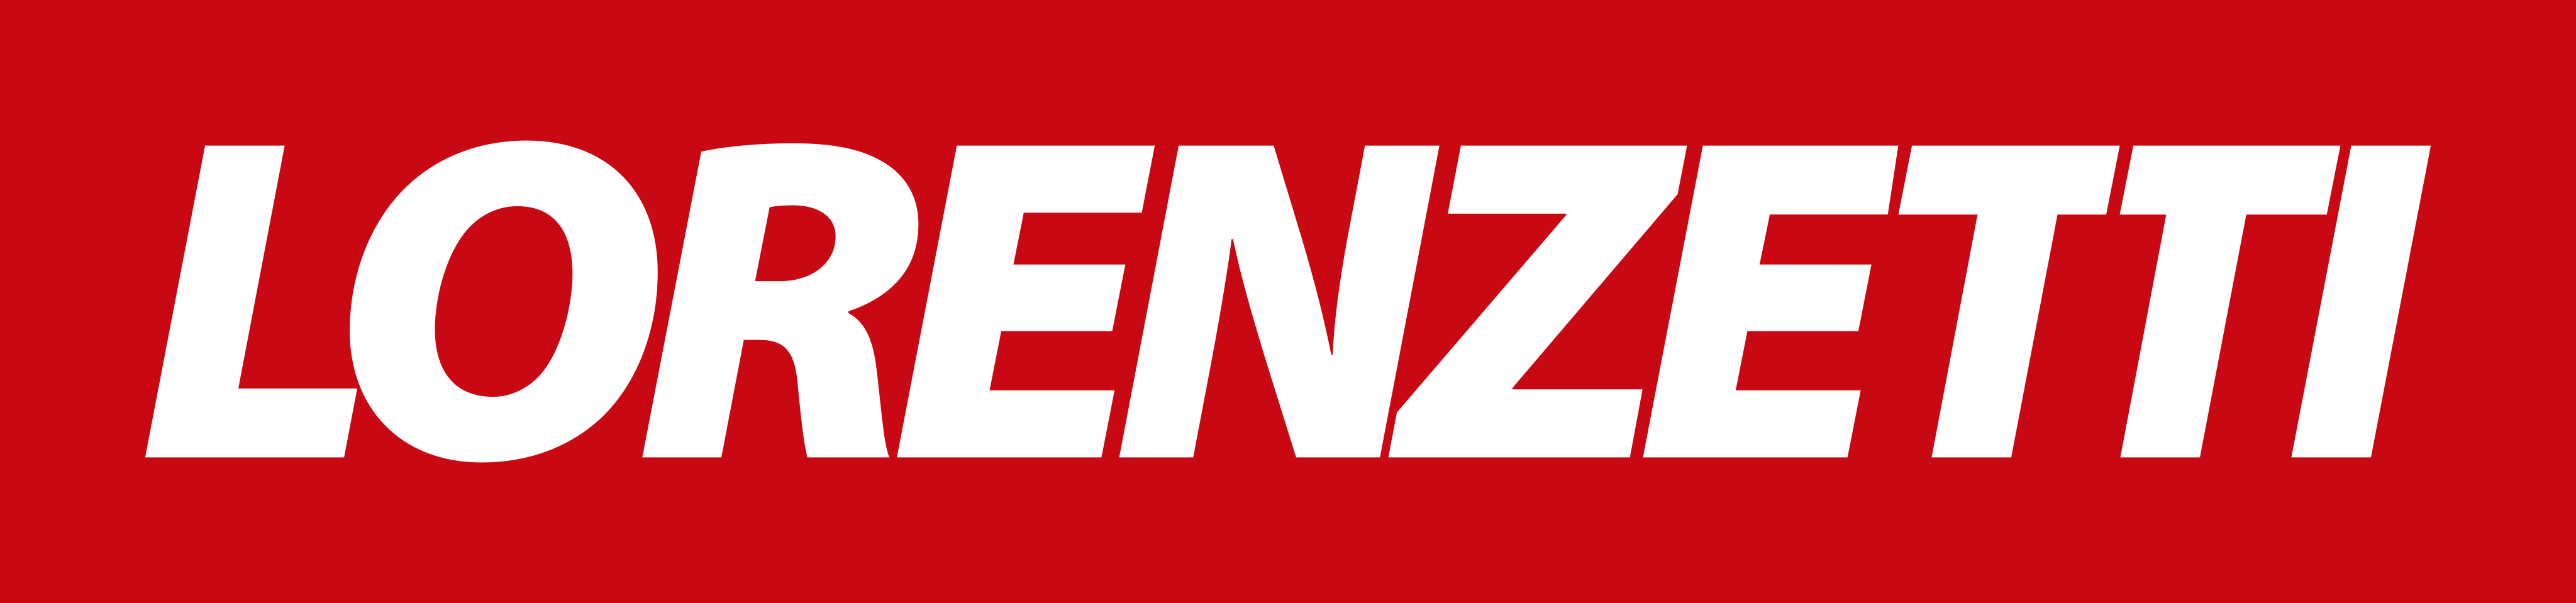 lorenzetti-logo